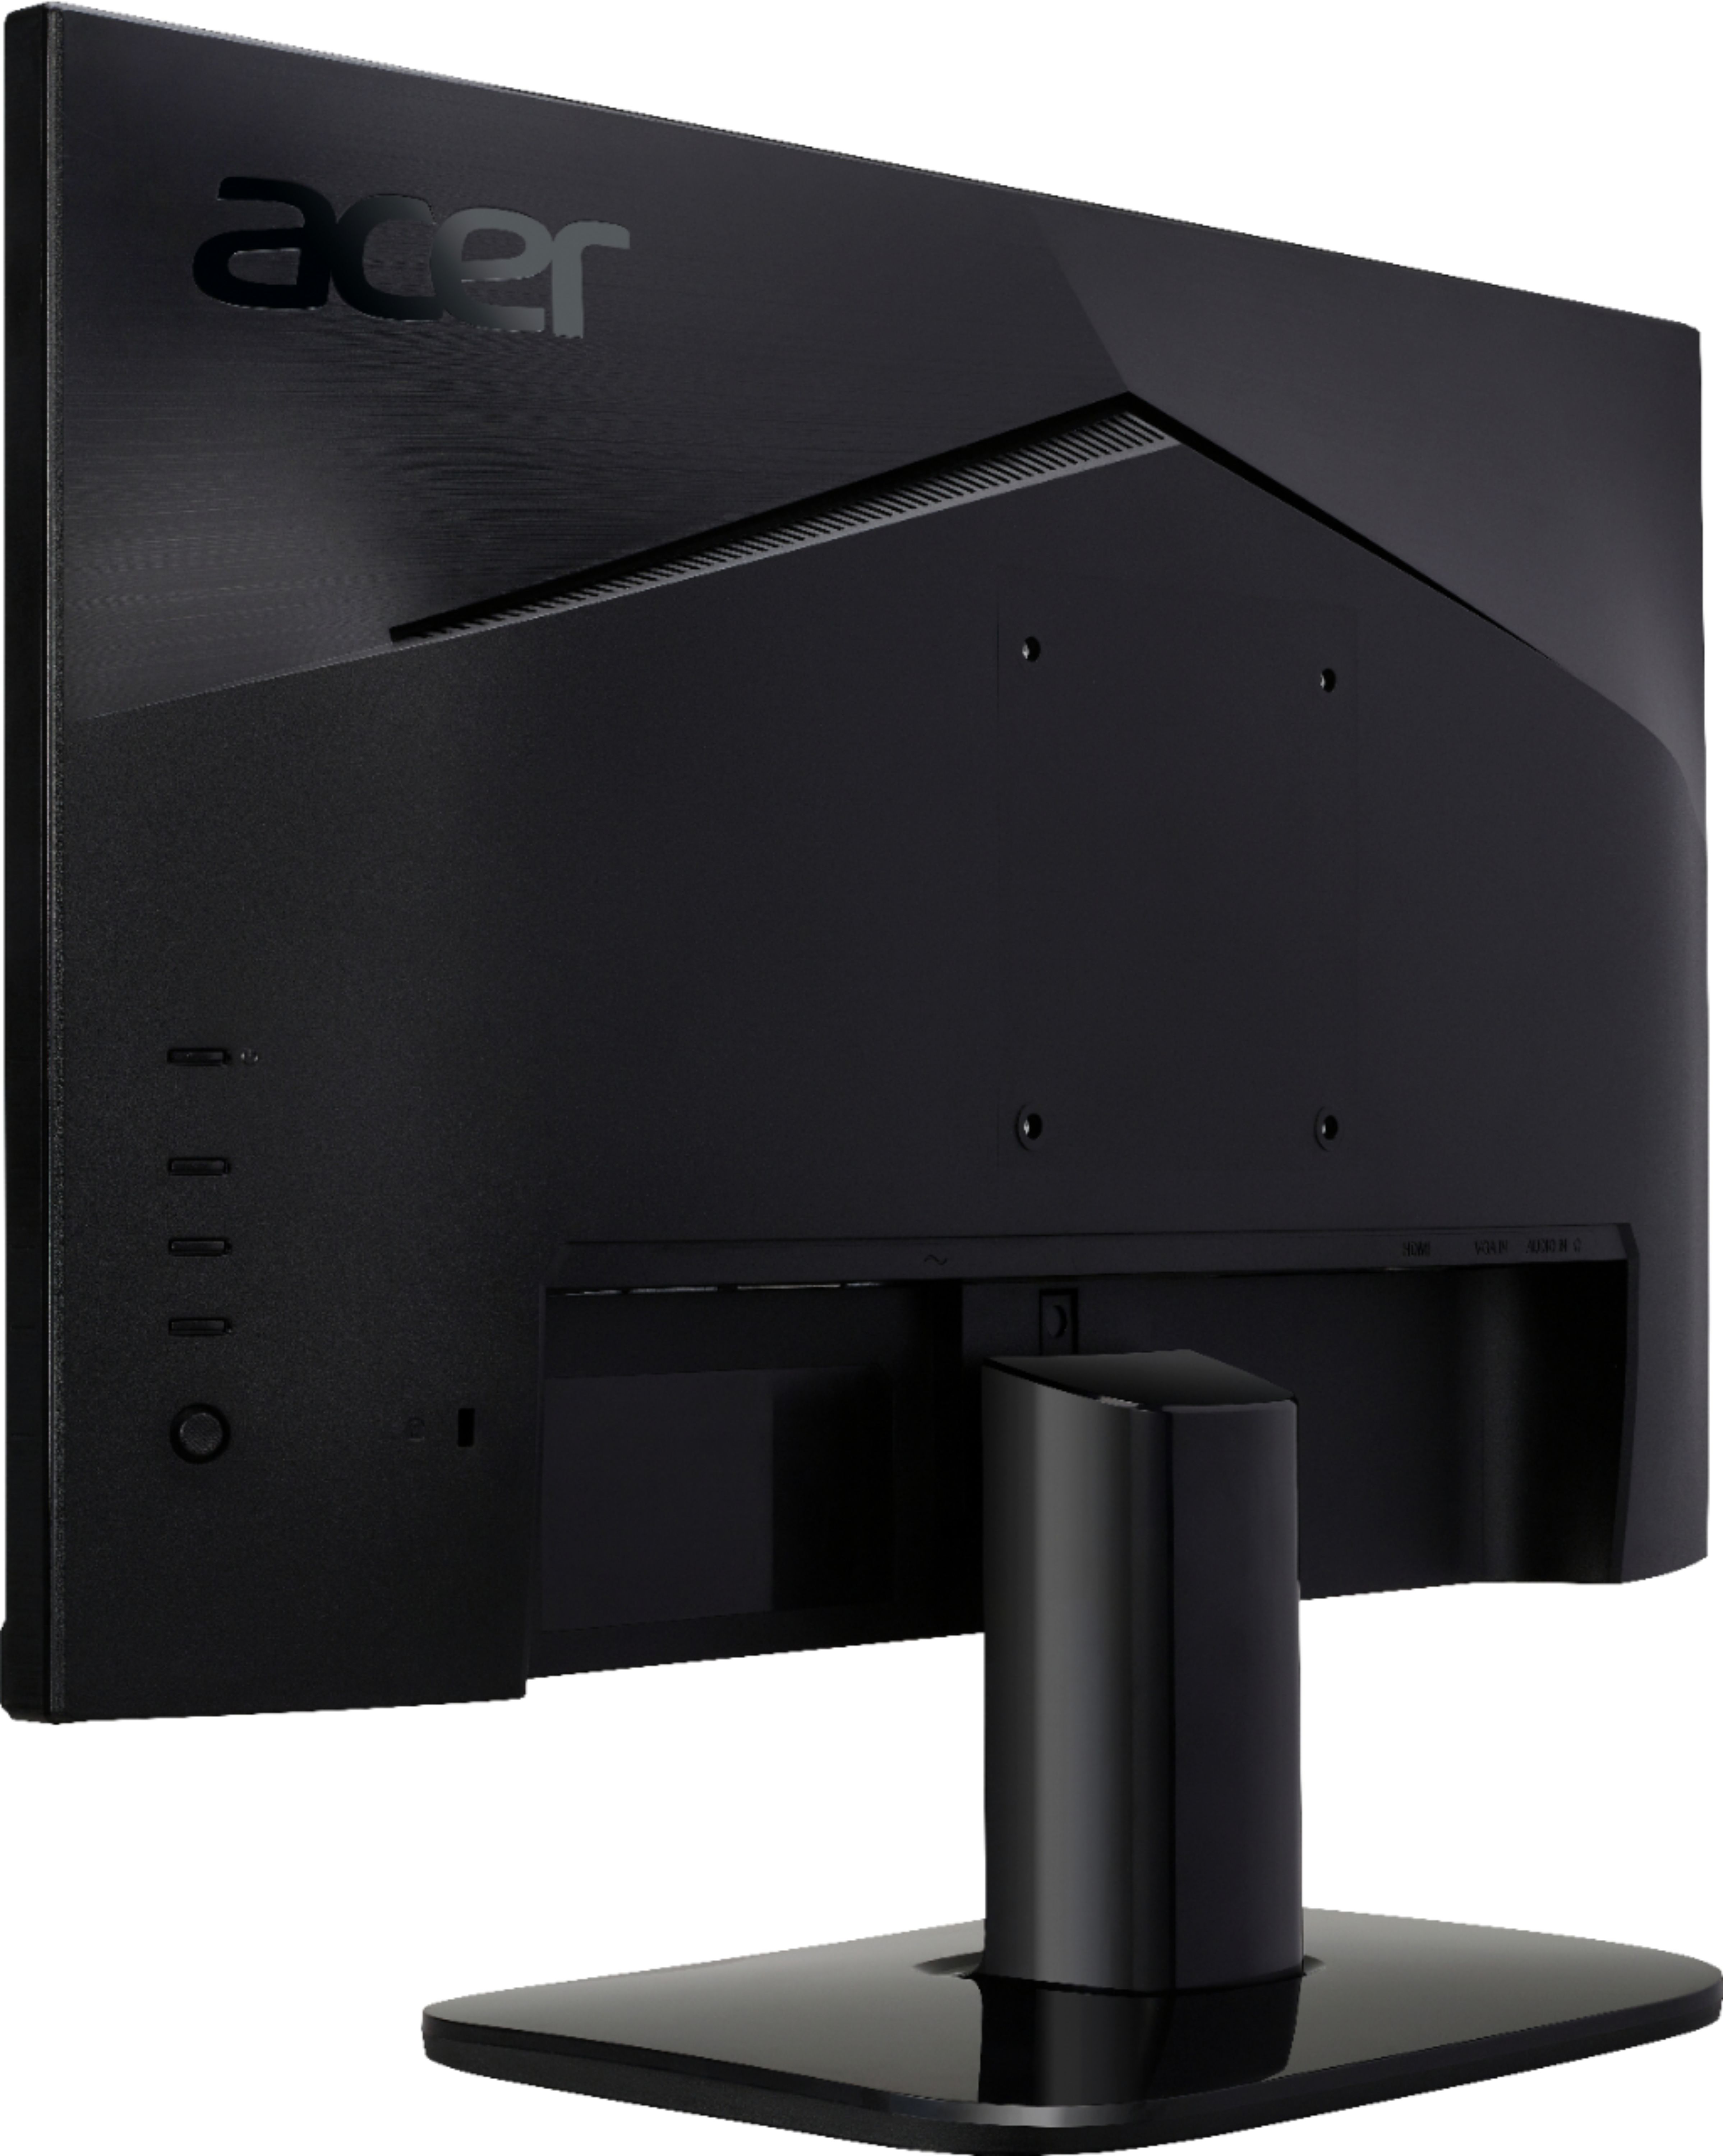 Back View: ASUS - ROG Strix XG279Q Widescreen Gaming LCD Monitor (HDMI, Display Port) - Black